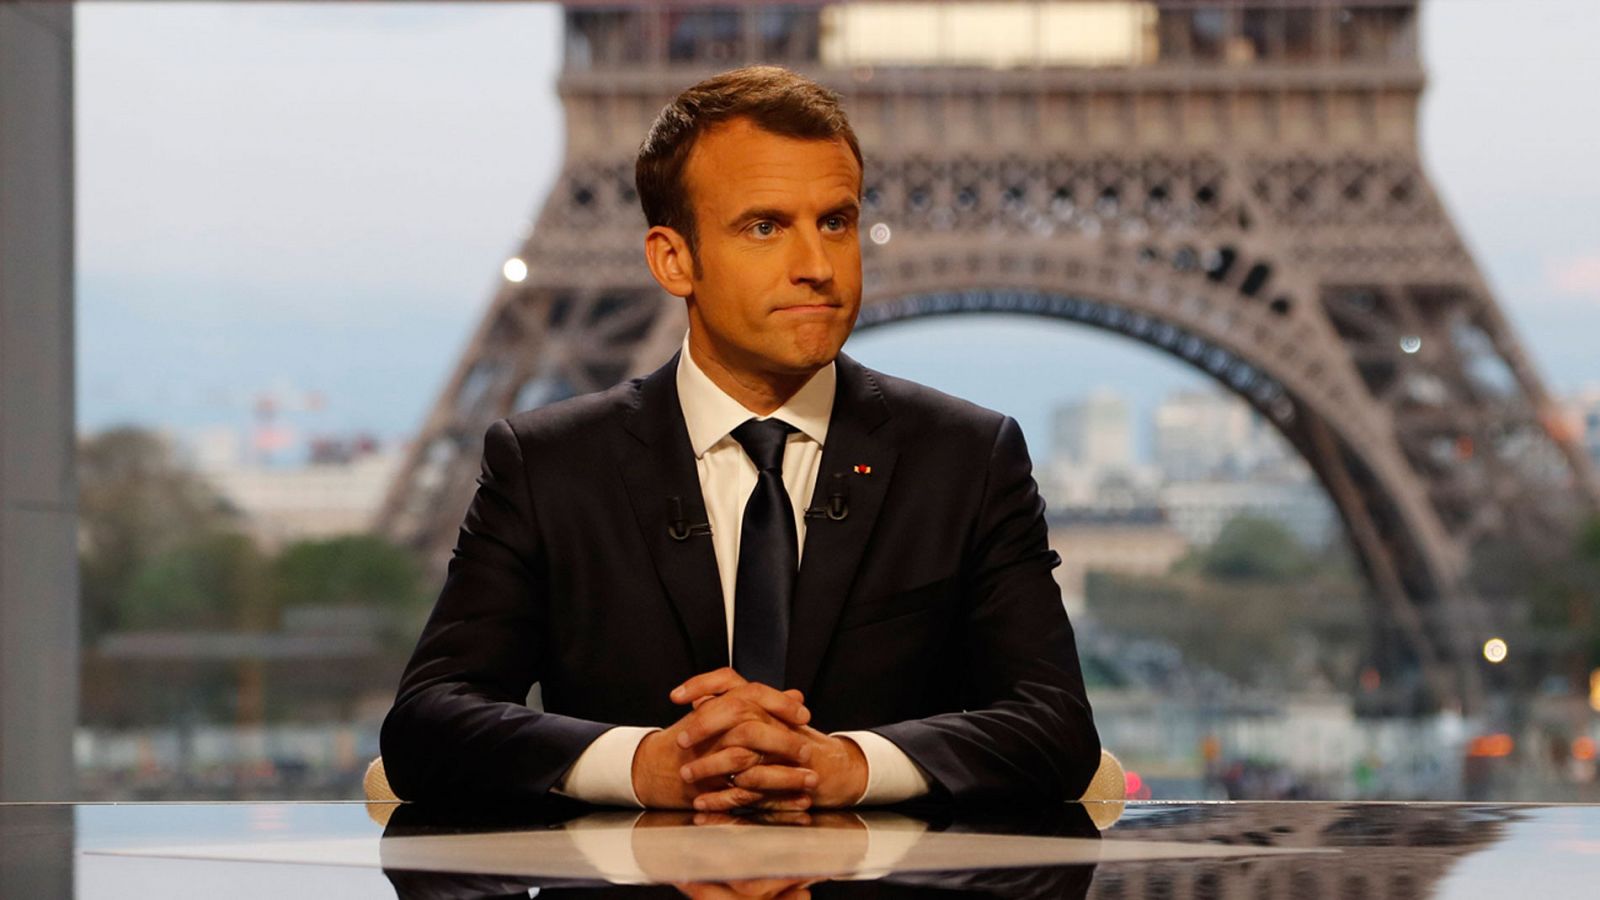 Guerra en Siria | Macron: "Francia no ha declarado la guerra a Siria"